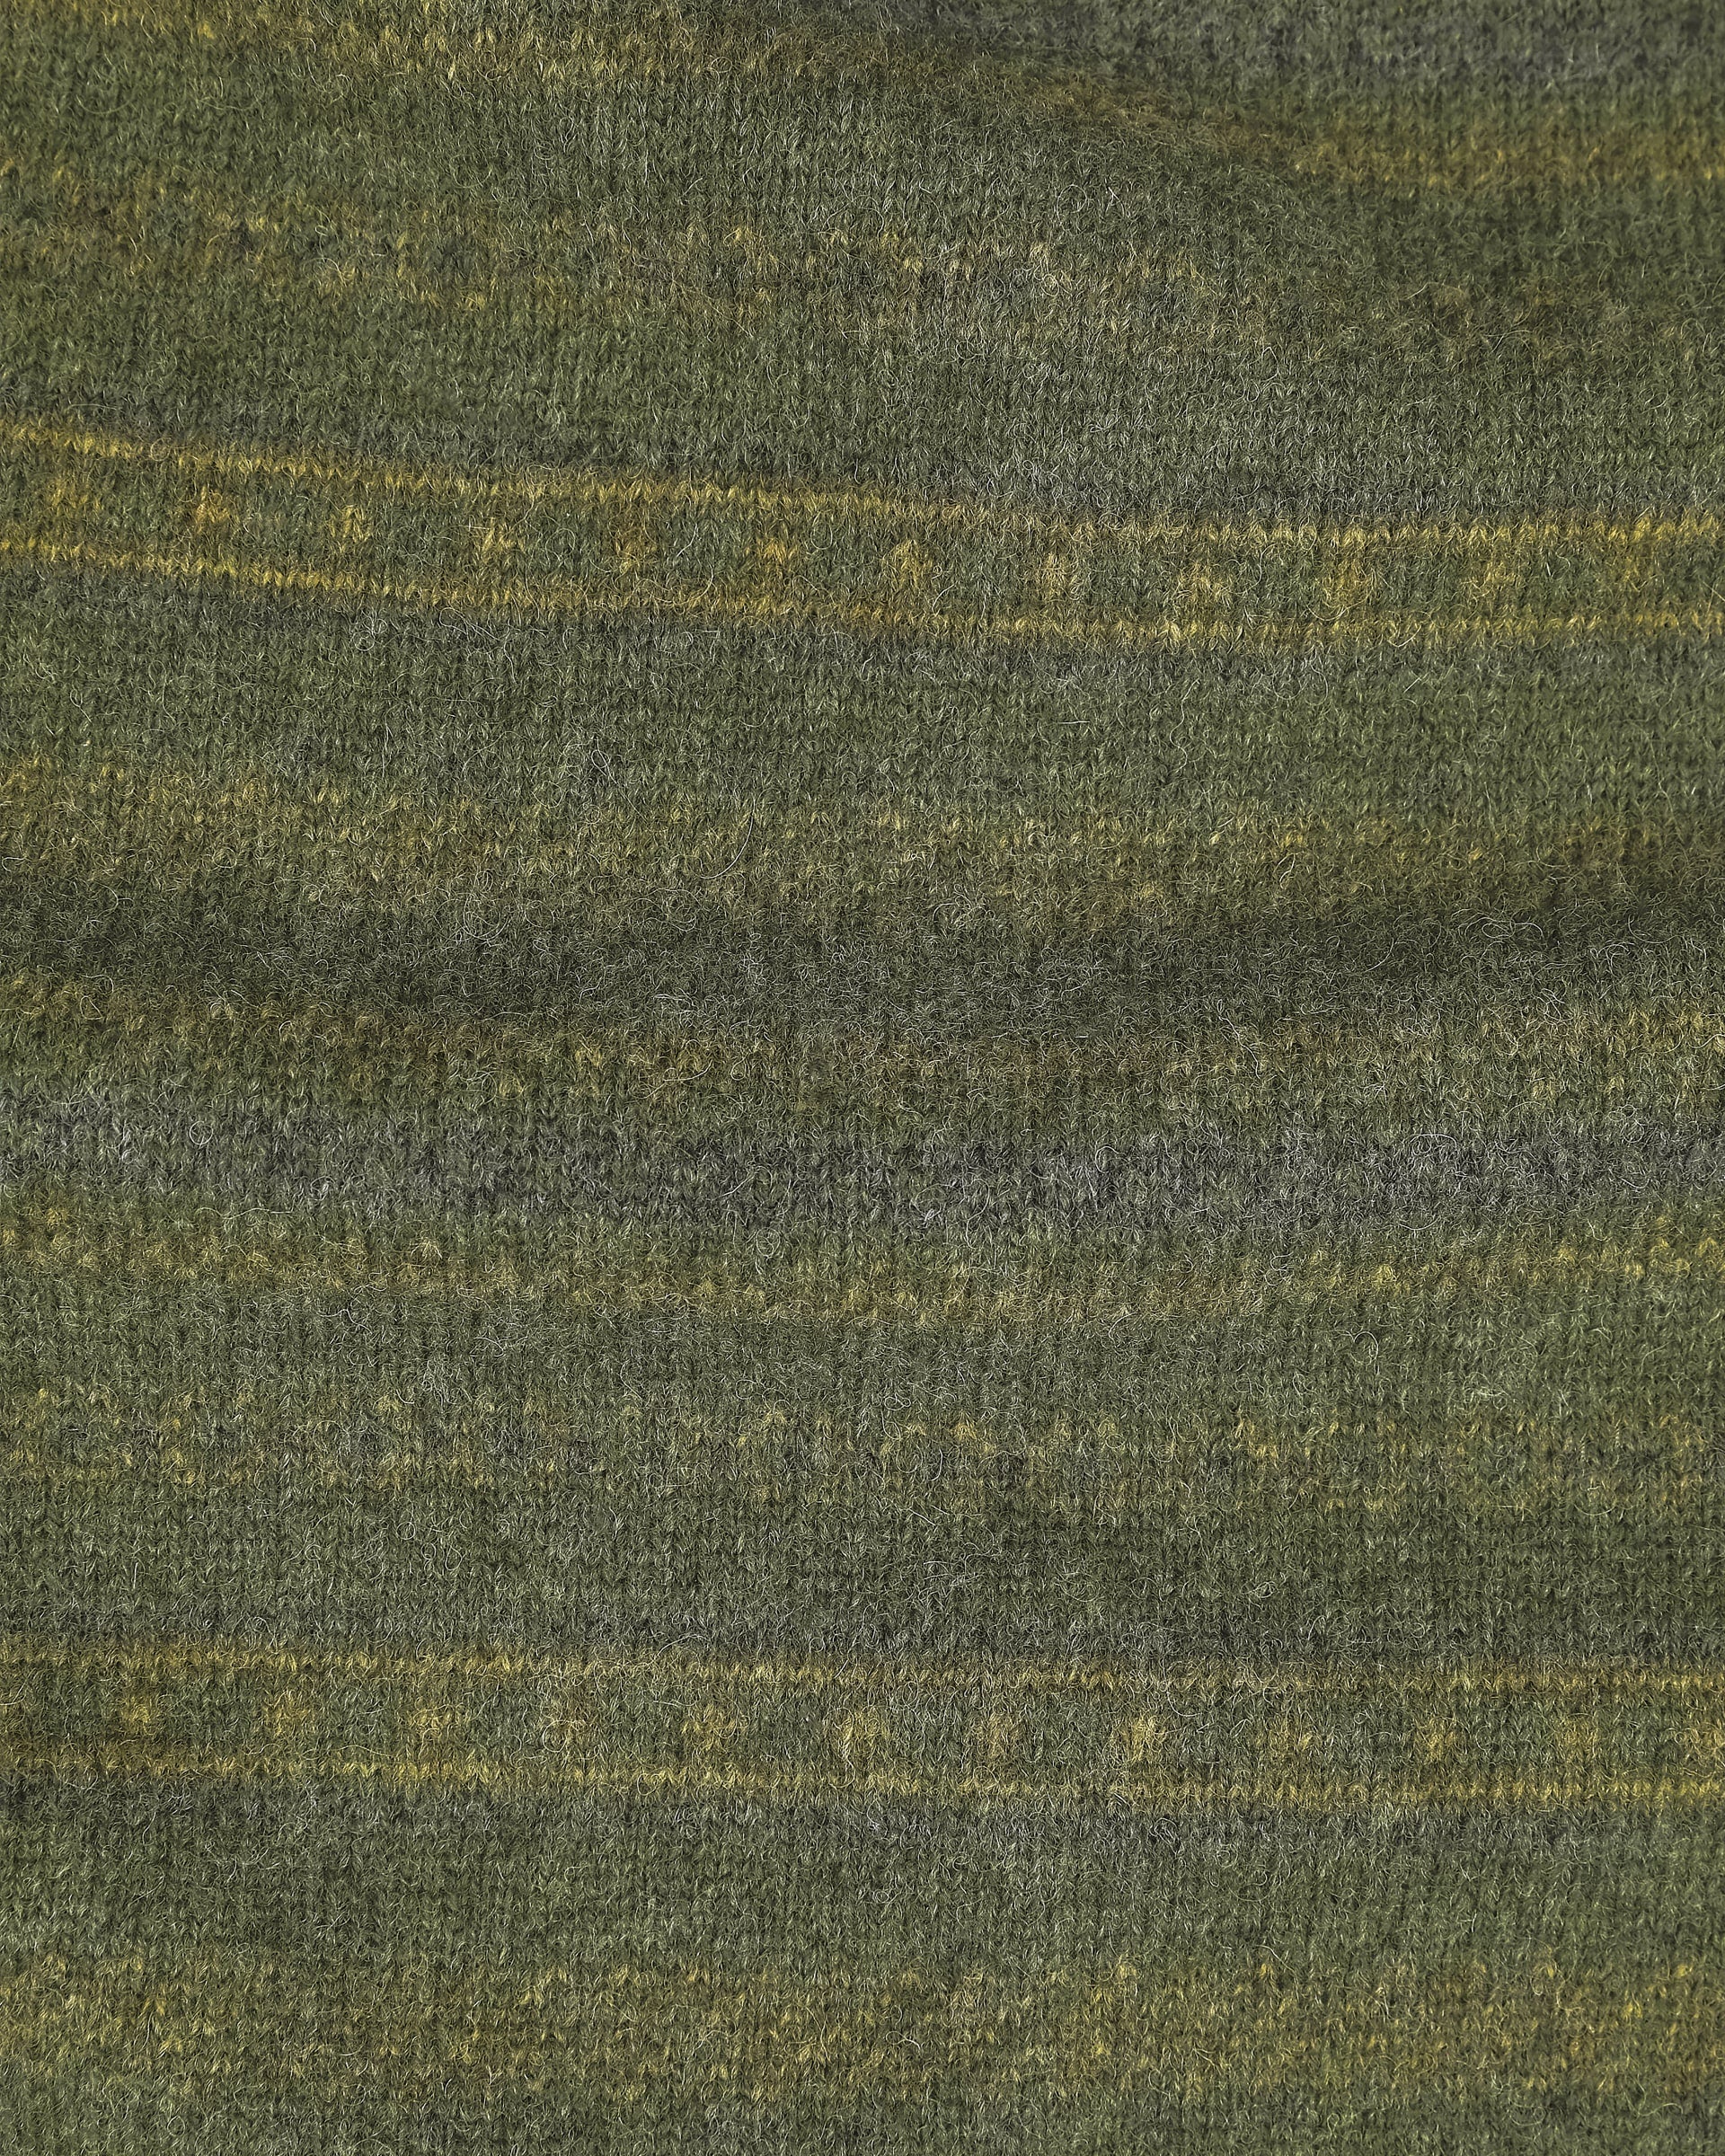 Nordic Crewneck Sweater Light Olive